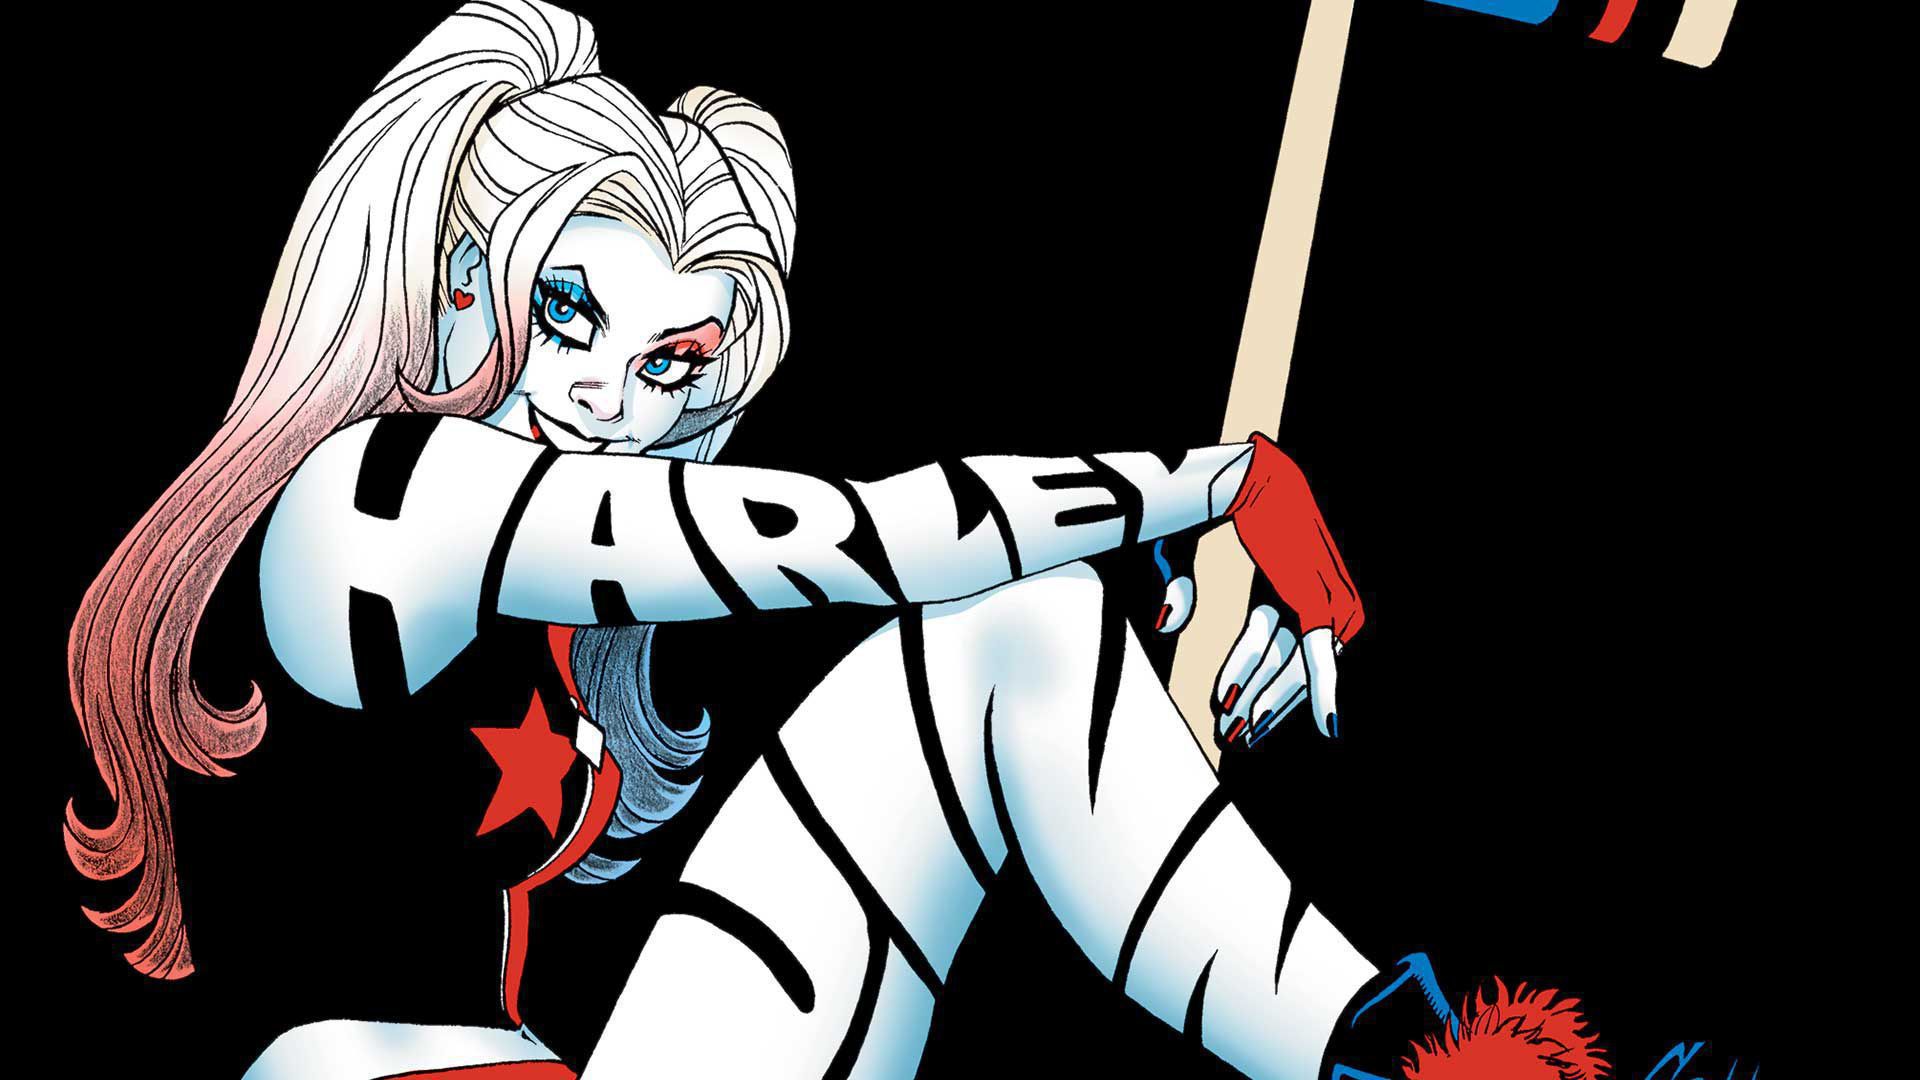 Harley Quinn Cartoon Wallpapers Wallpaper Cave